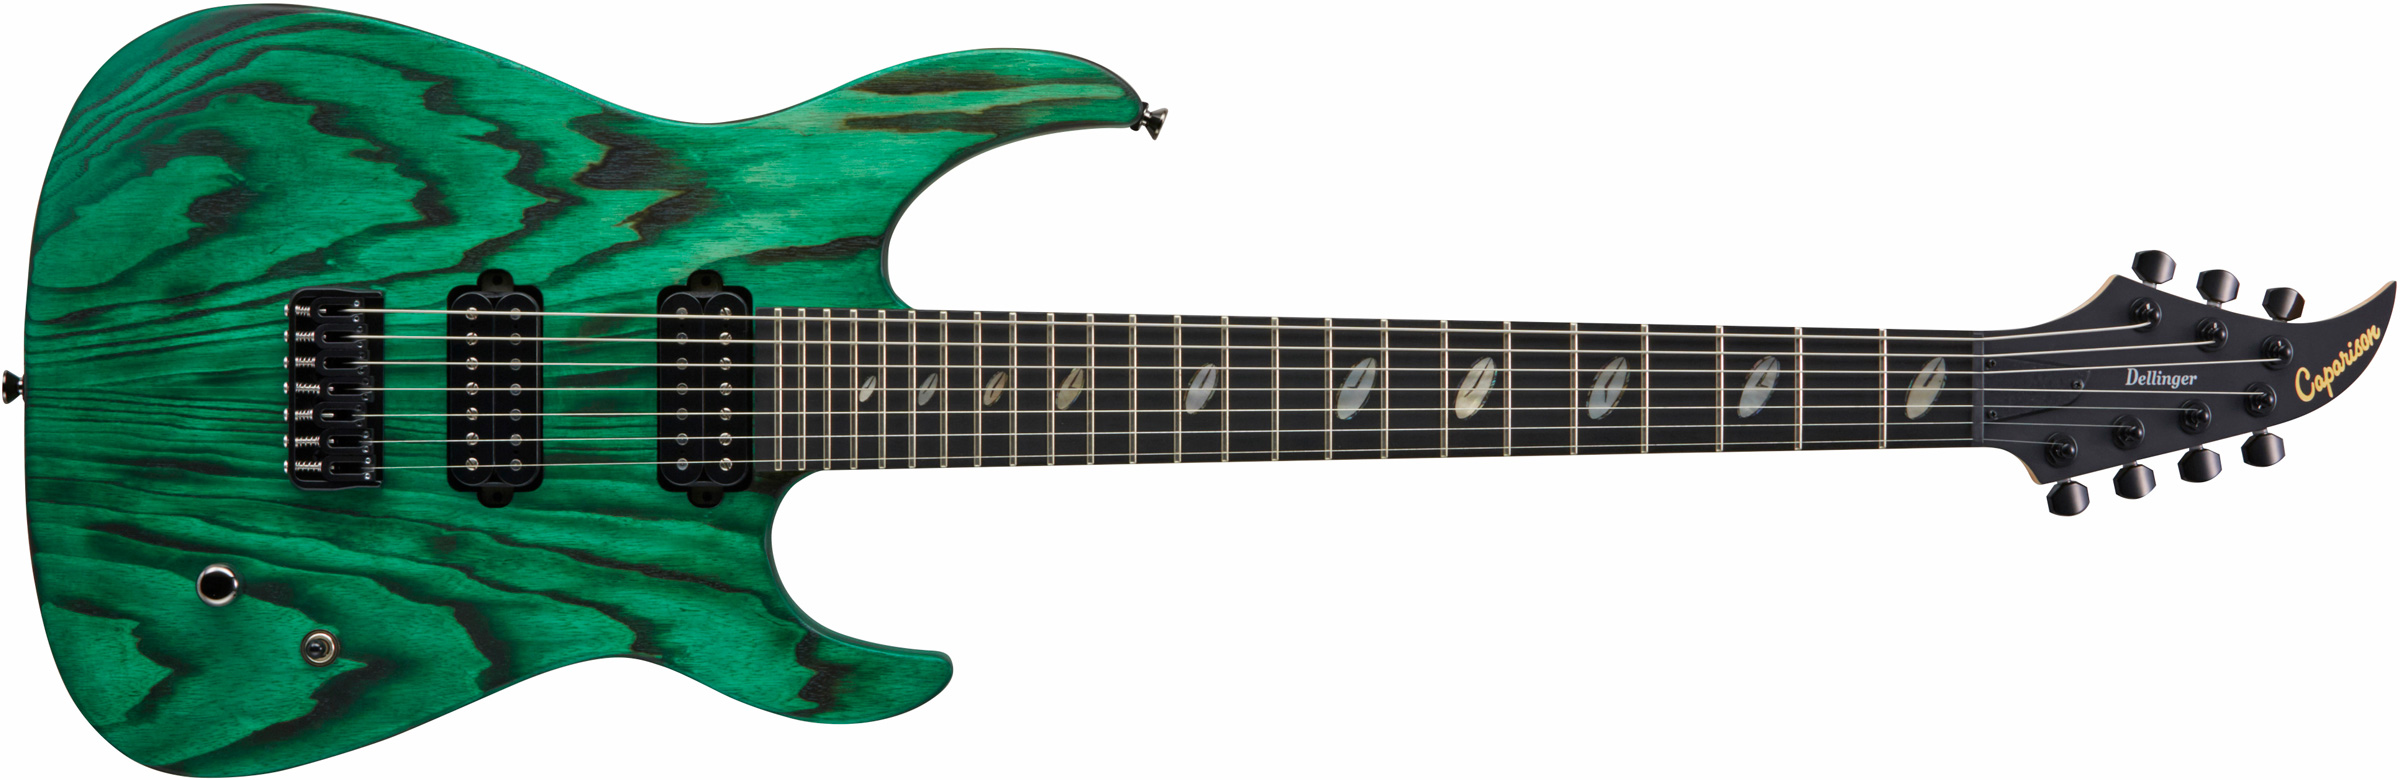 Caparison Guitars Dellinger 7 FX-AM